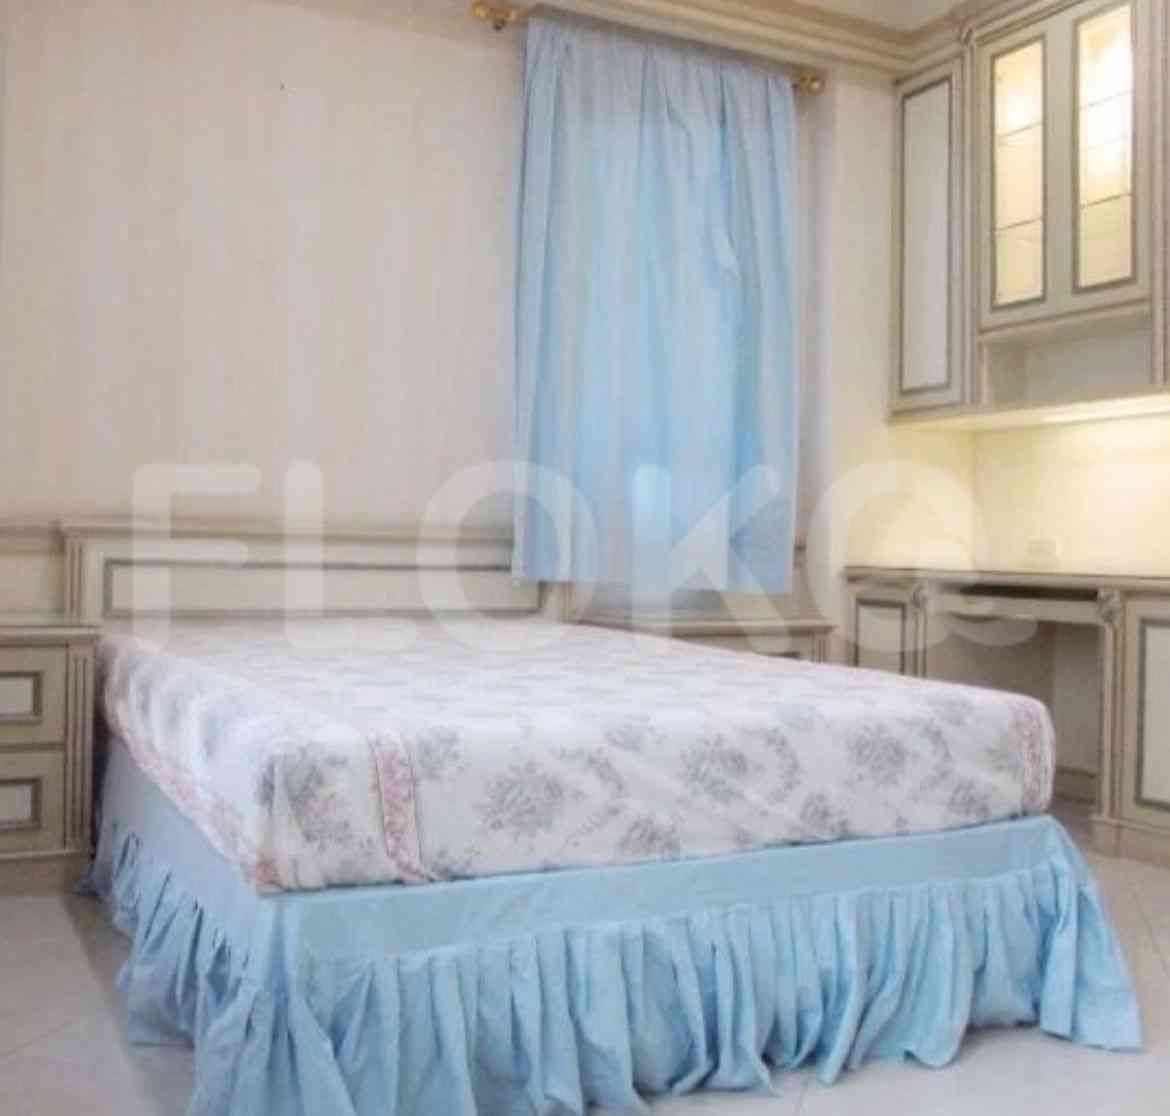 3 Bedroom on 23rd Floor for Rent in Puri Kemayoran Apartment - fke8a7 1